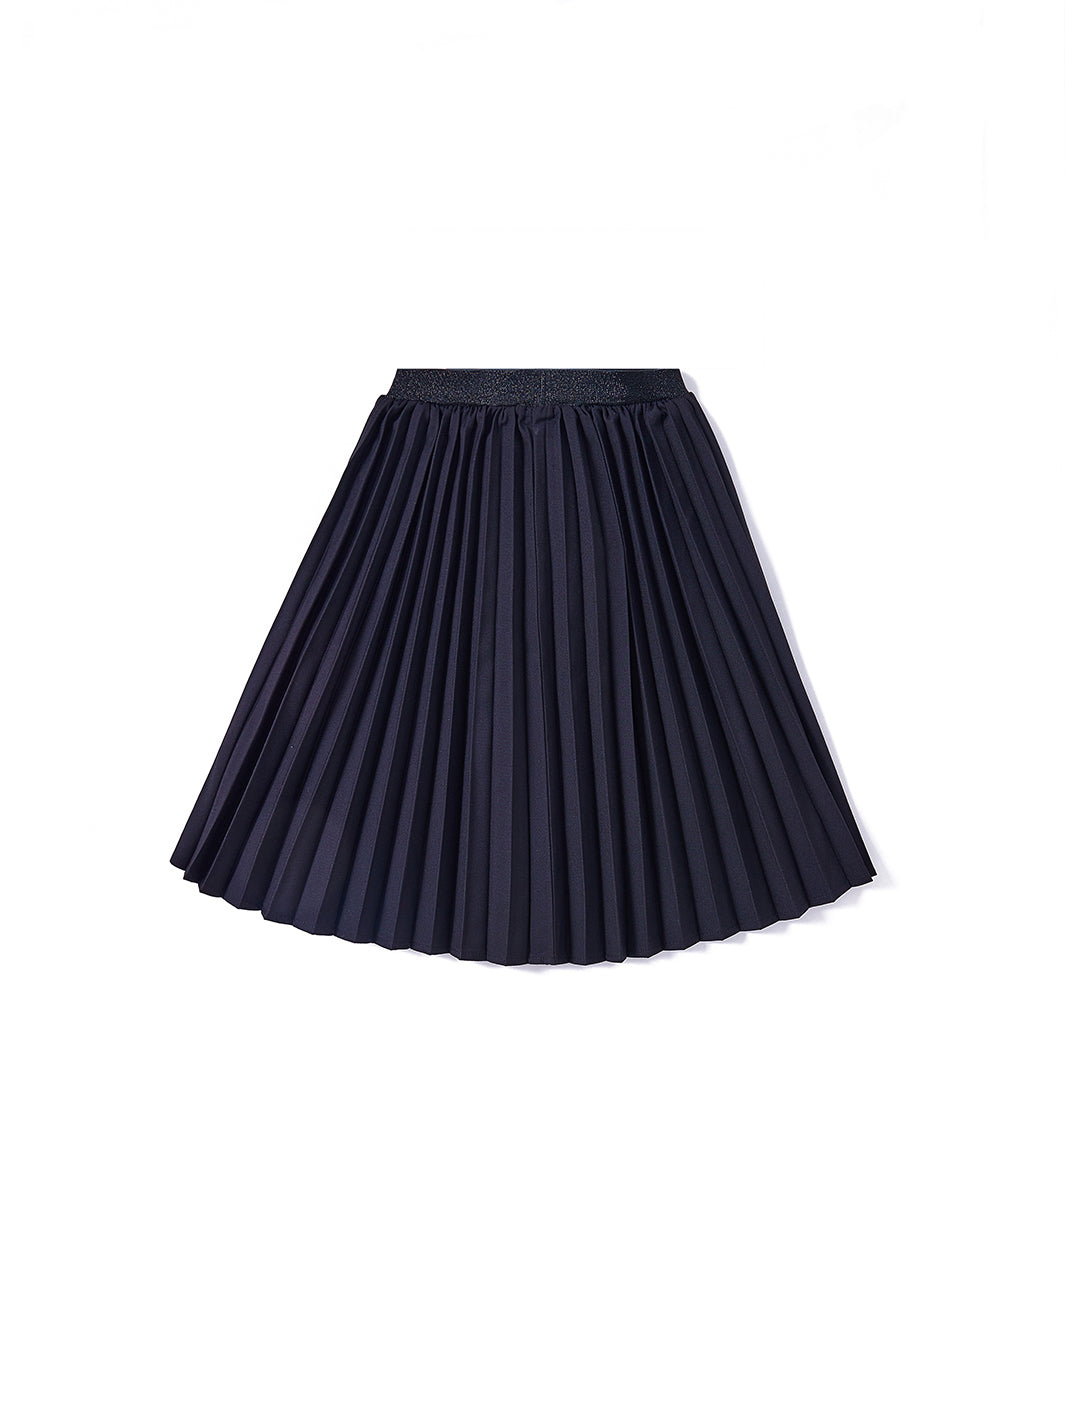 Accordion Pleated Skirt